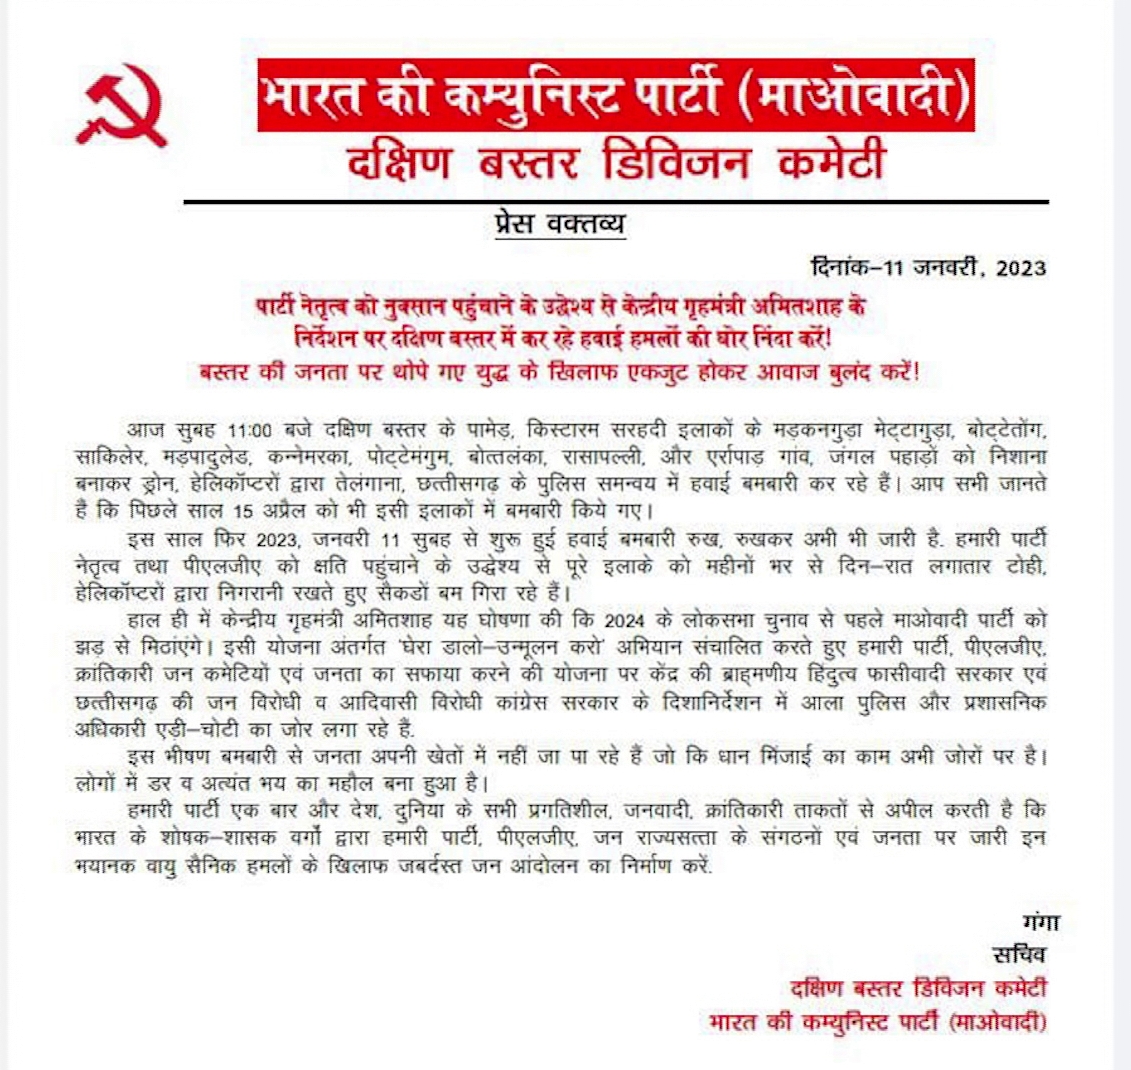 maoist hidma is alive